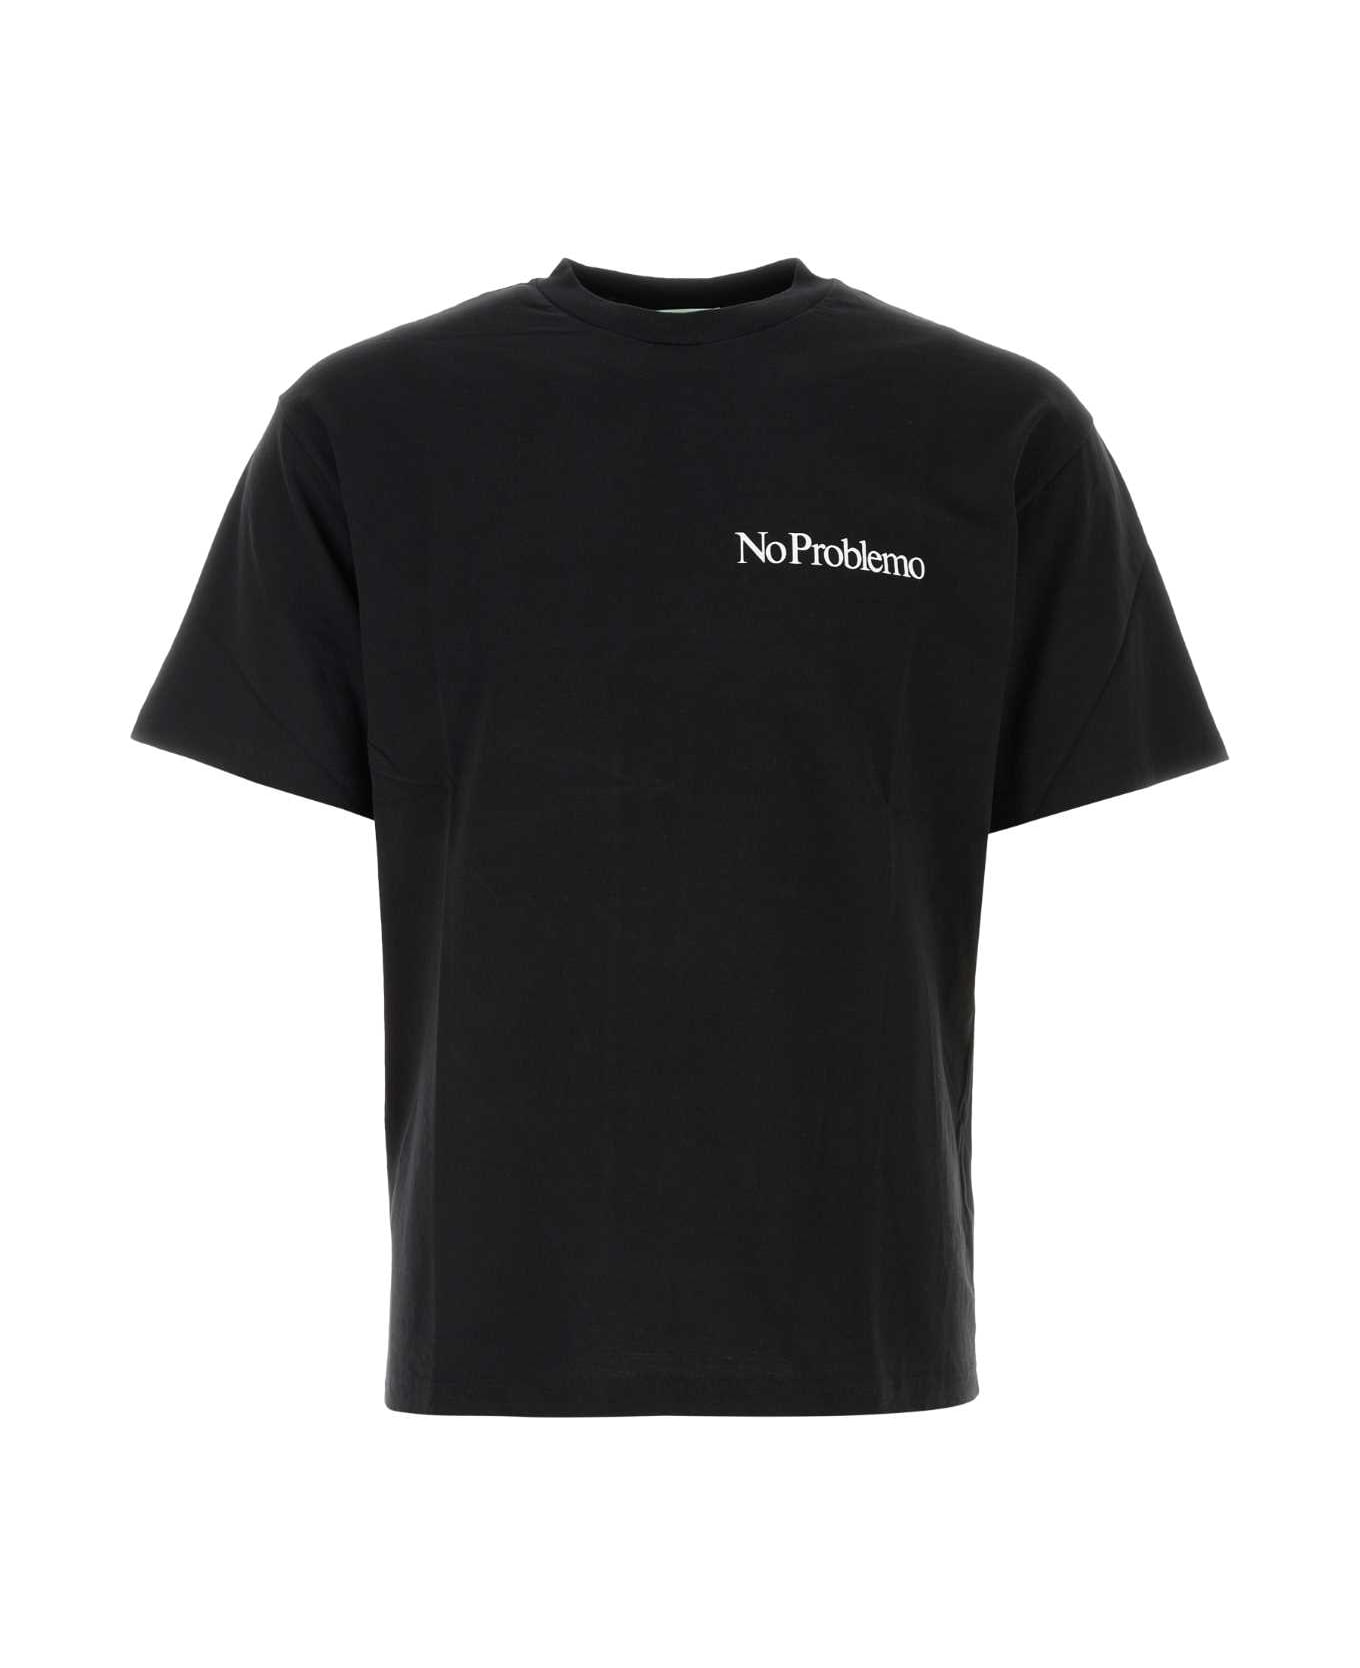 Aries Black Cotton T-shirt - BLACK